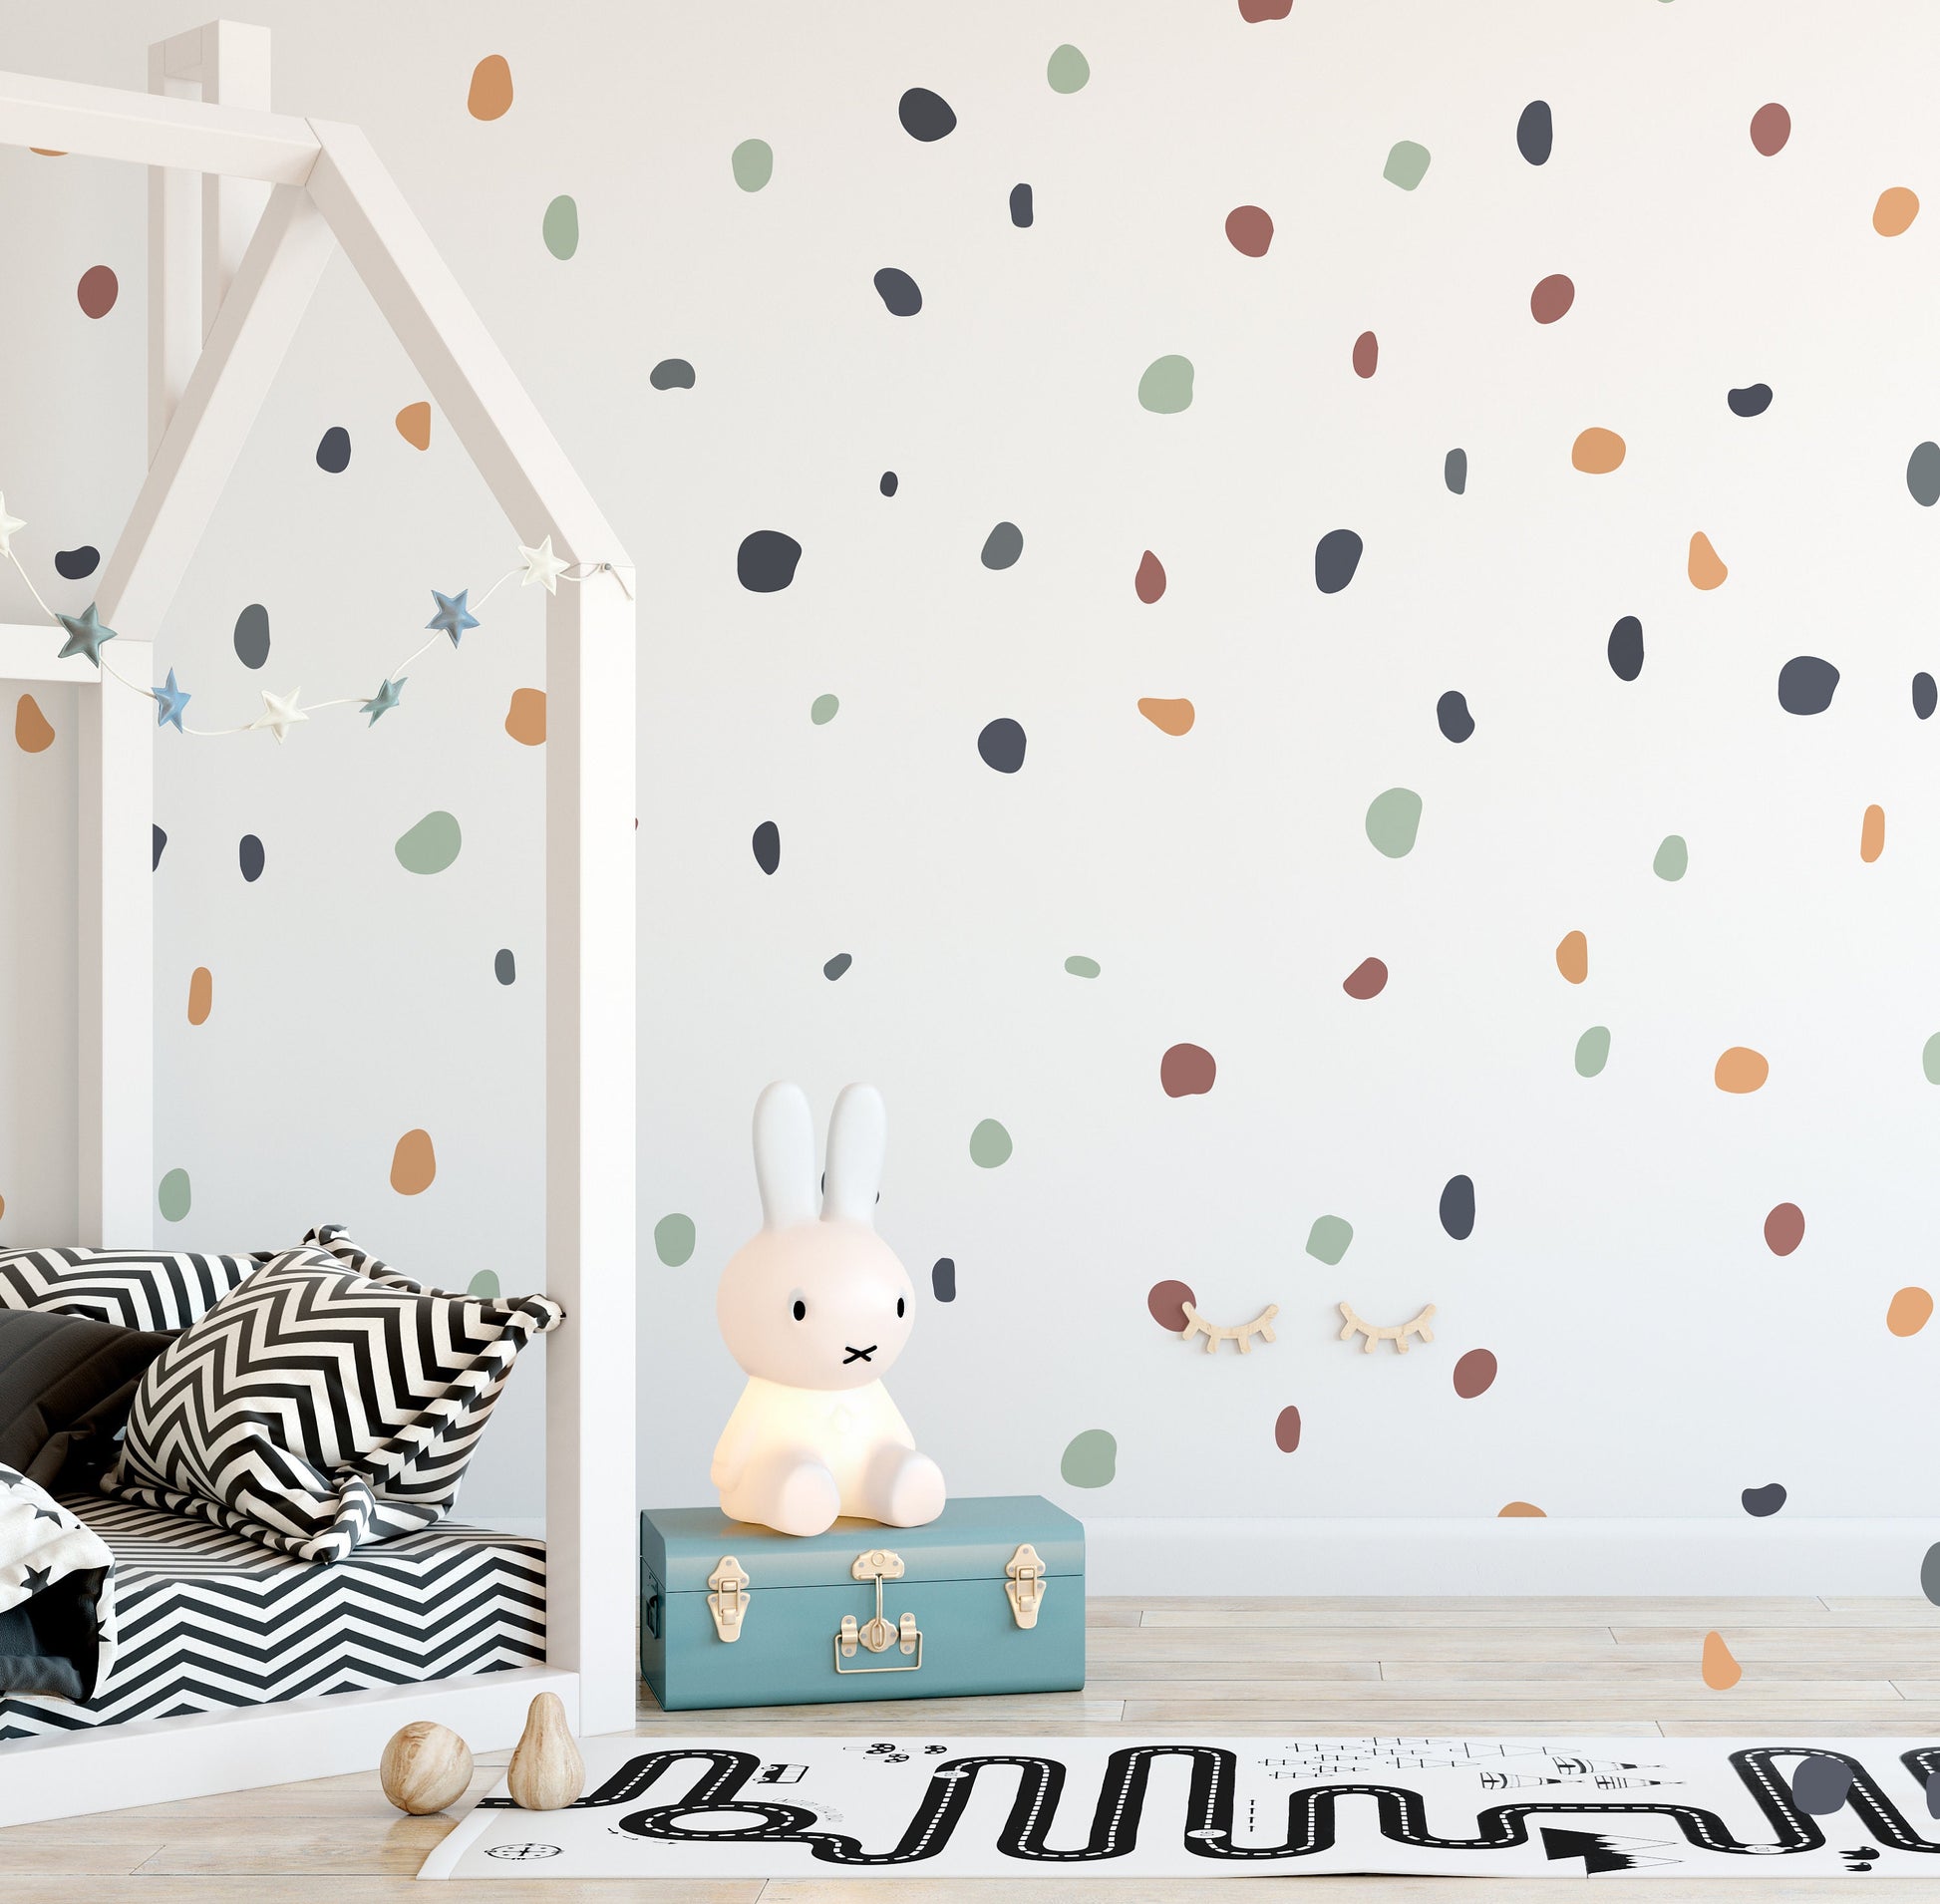 140 Boho Chic Polka Dots, Chic Wall Decals, Boho Wall Stickers, Kids Wall Stickers, Nursery Wall Decals, Removable Wall Stickers, DIY